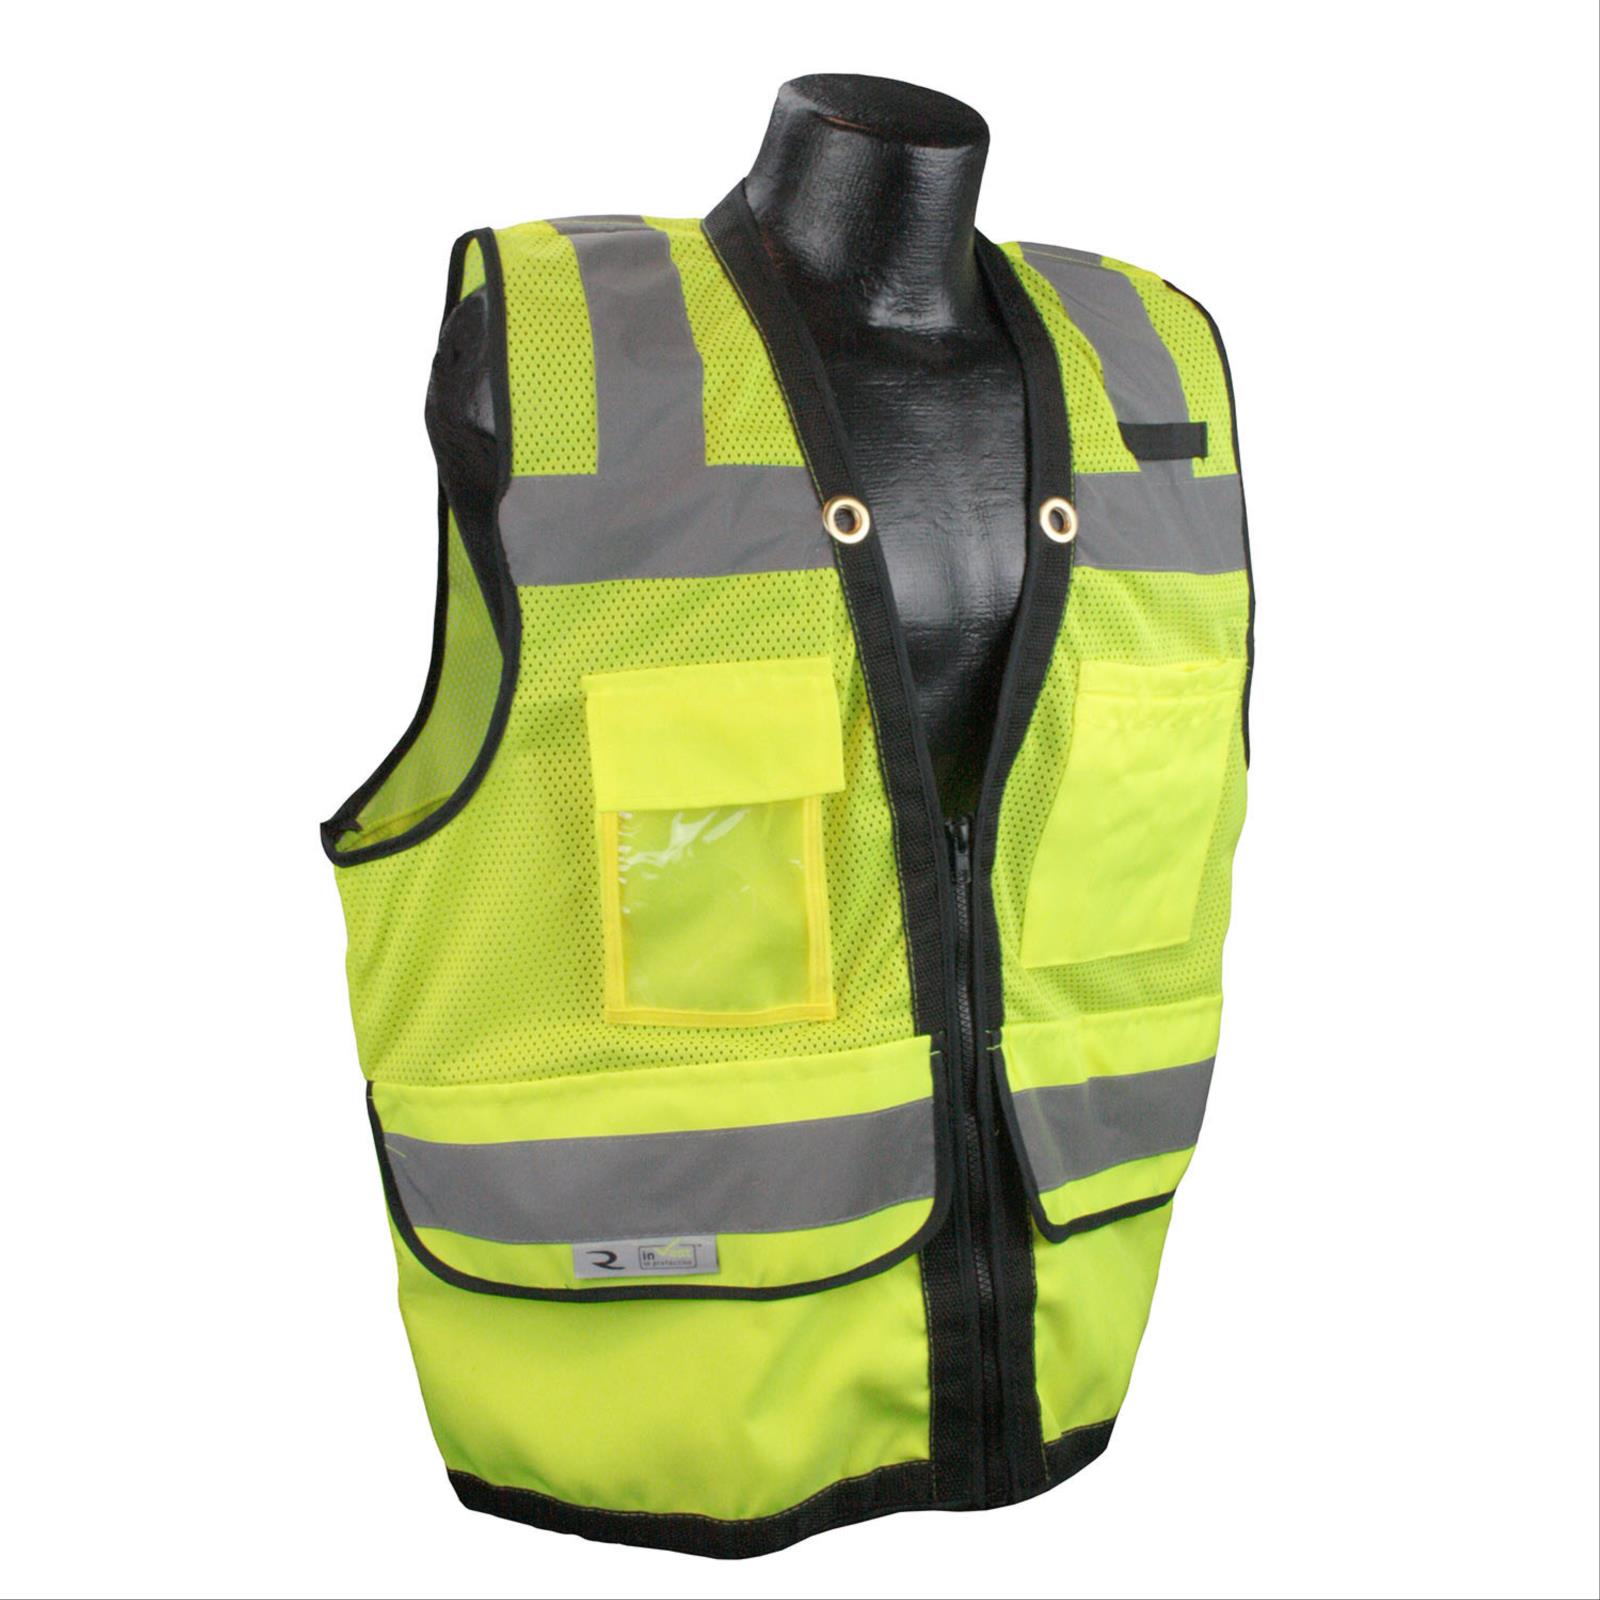 Radwear™ SV59Z Heavy Duty Surveyor Safety Vest with Zipper, Class 2 Type R